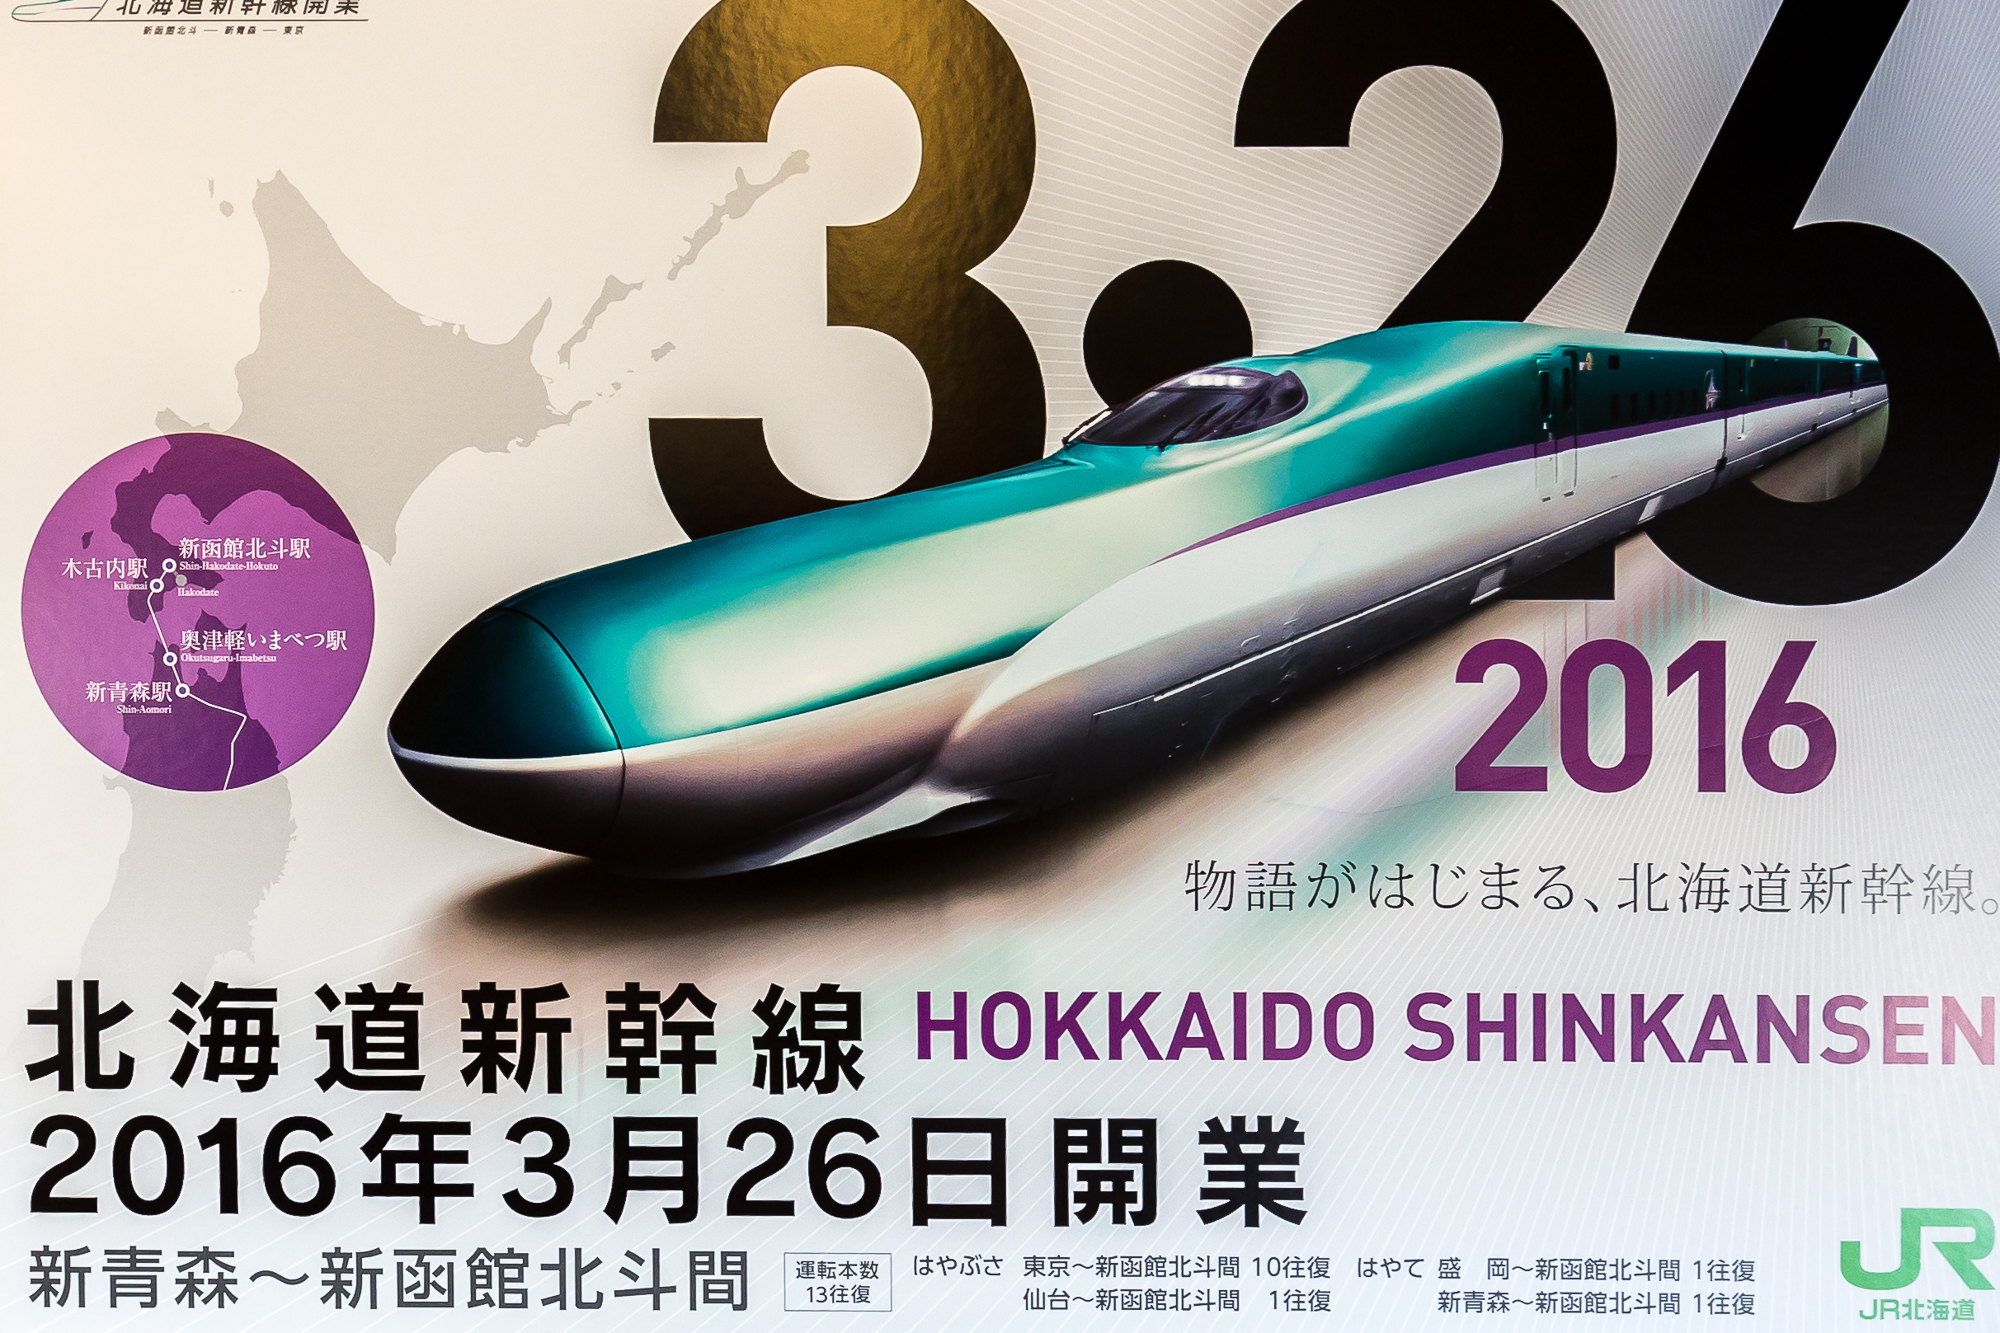 The Hokkaido Shinkansen Guide: A New Tokyo to Sapporo experience